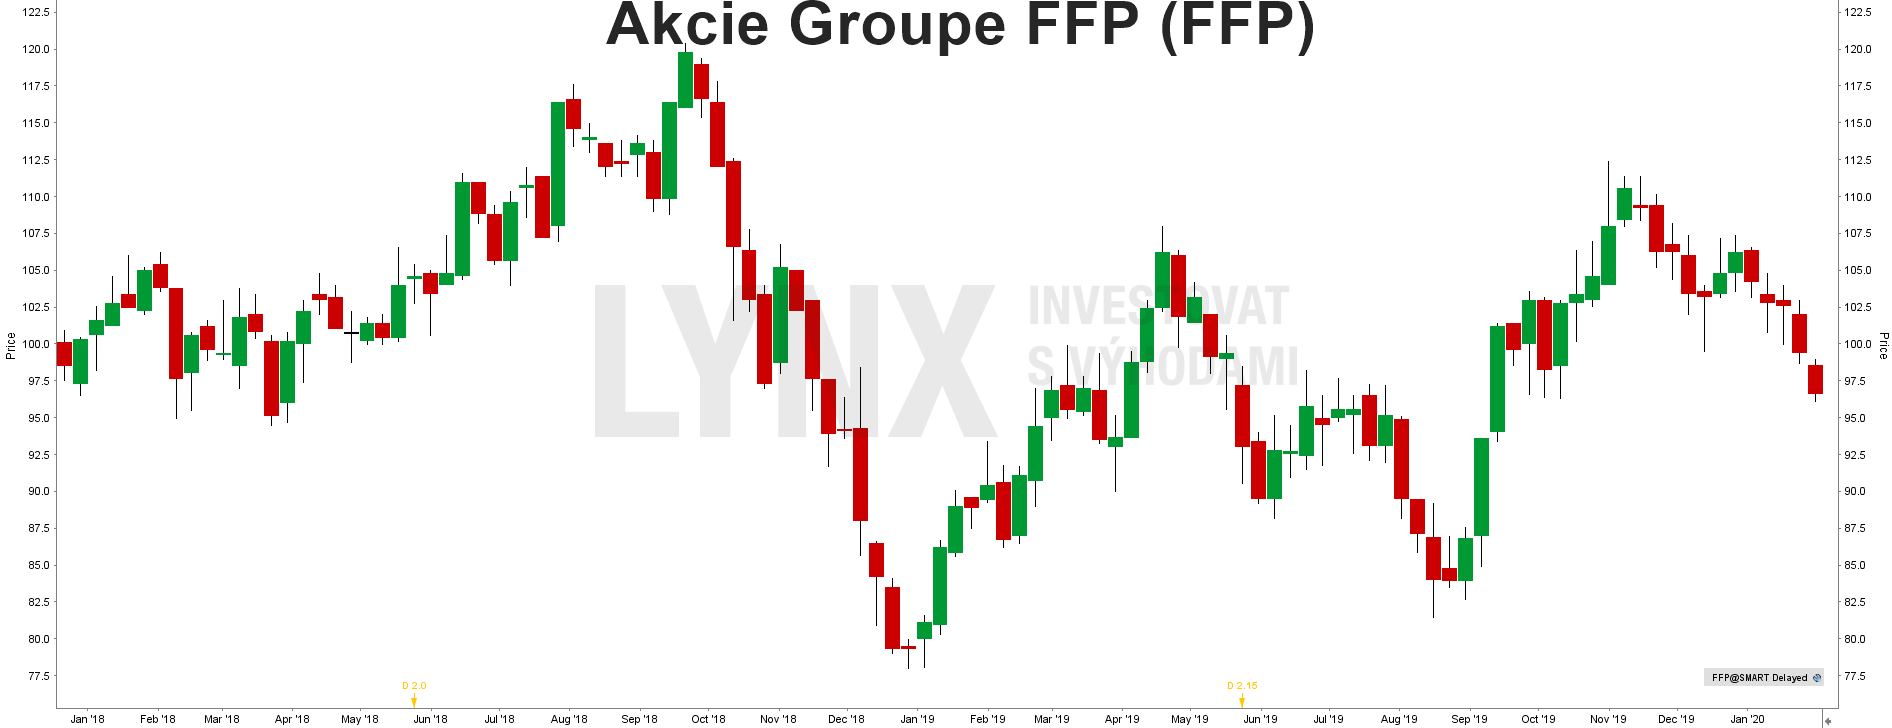 Akcie Groupe FFP